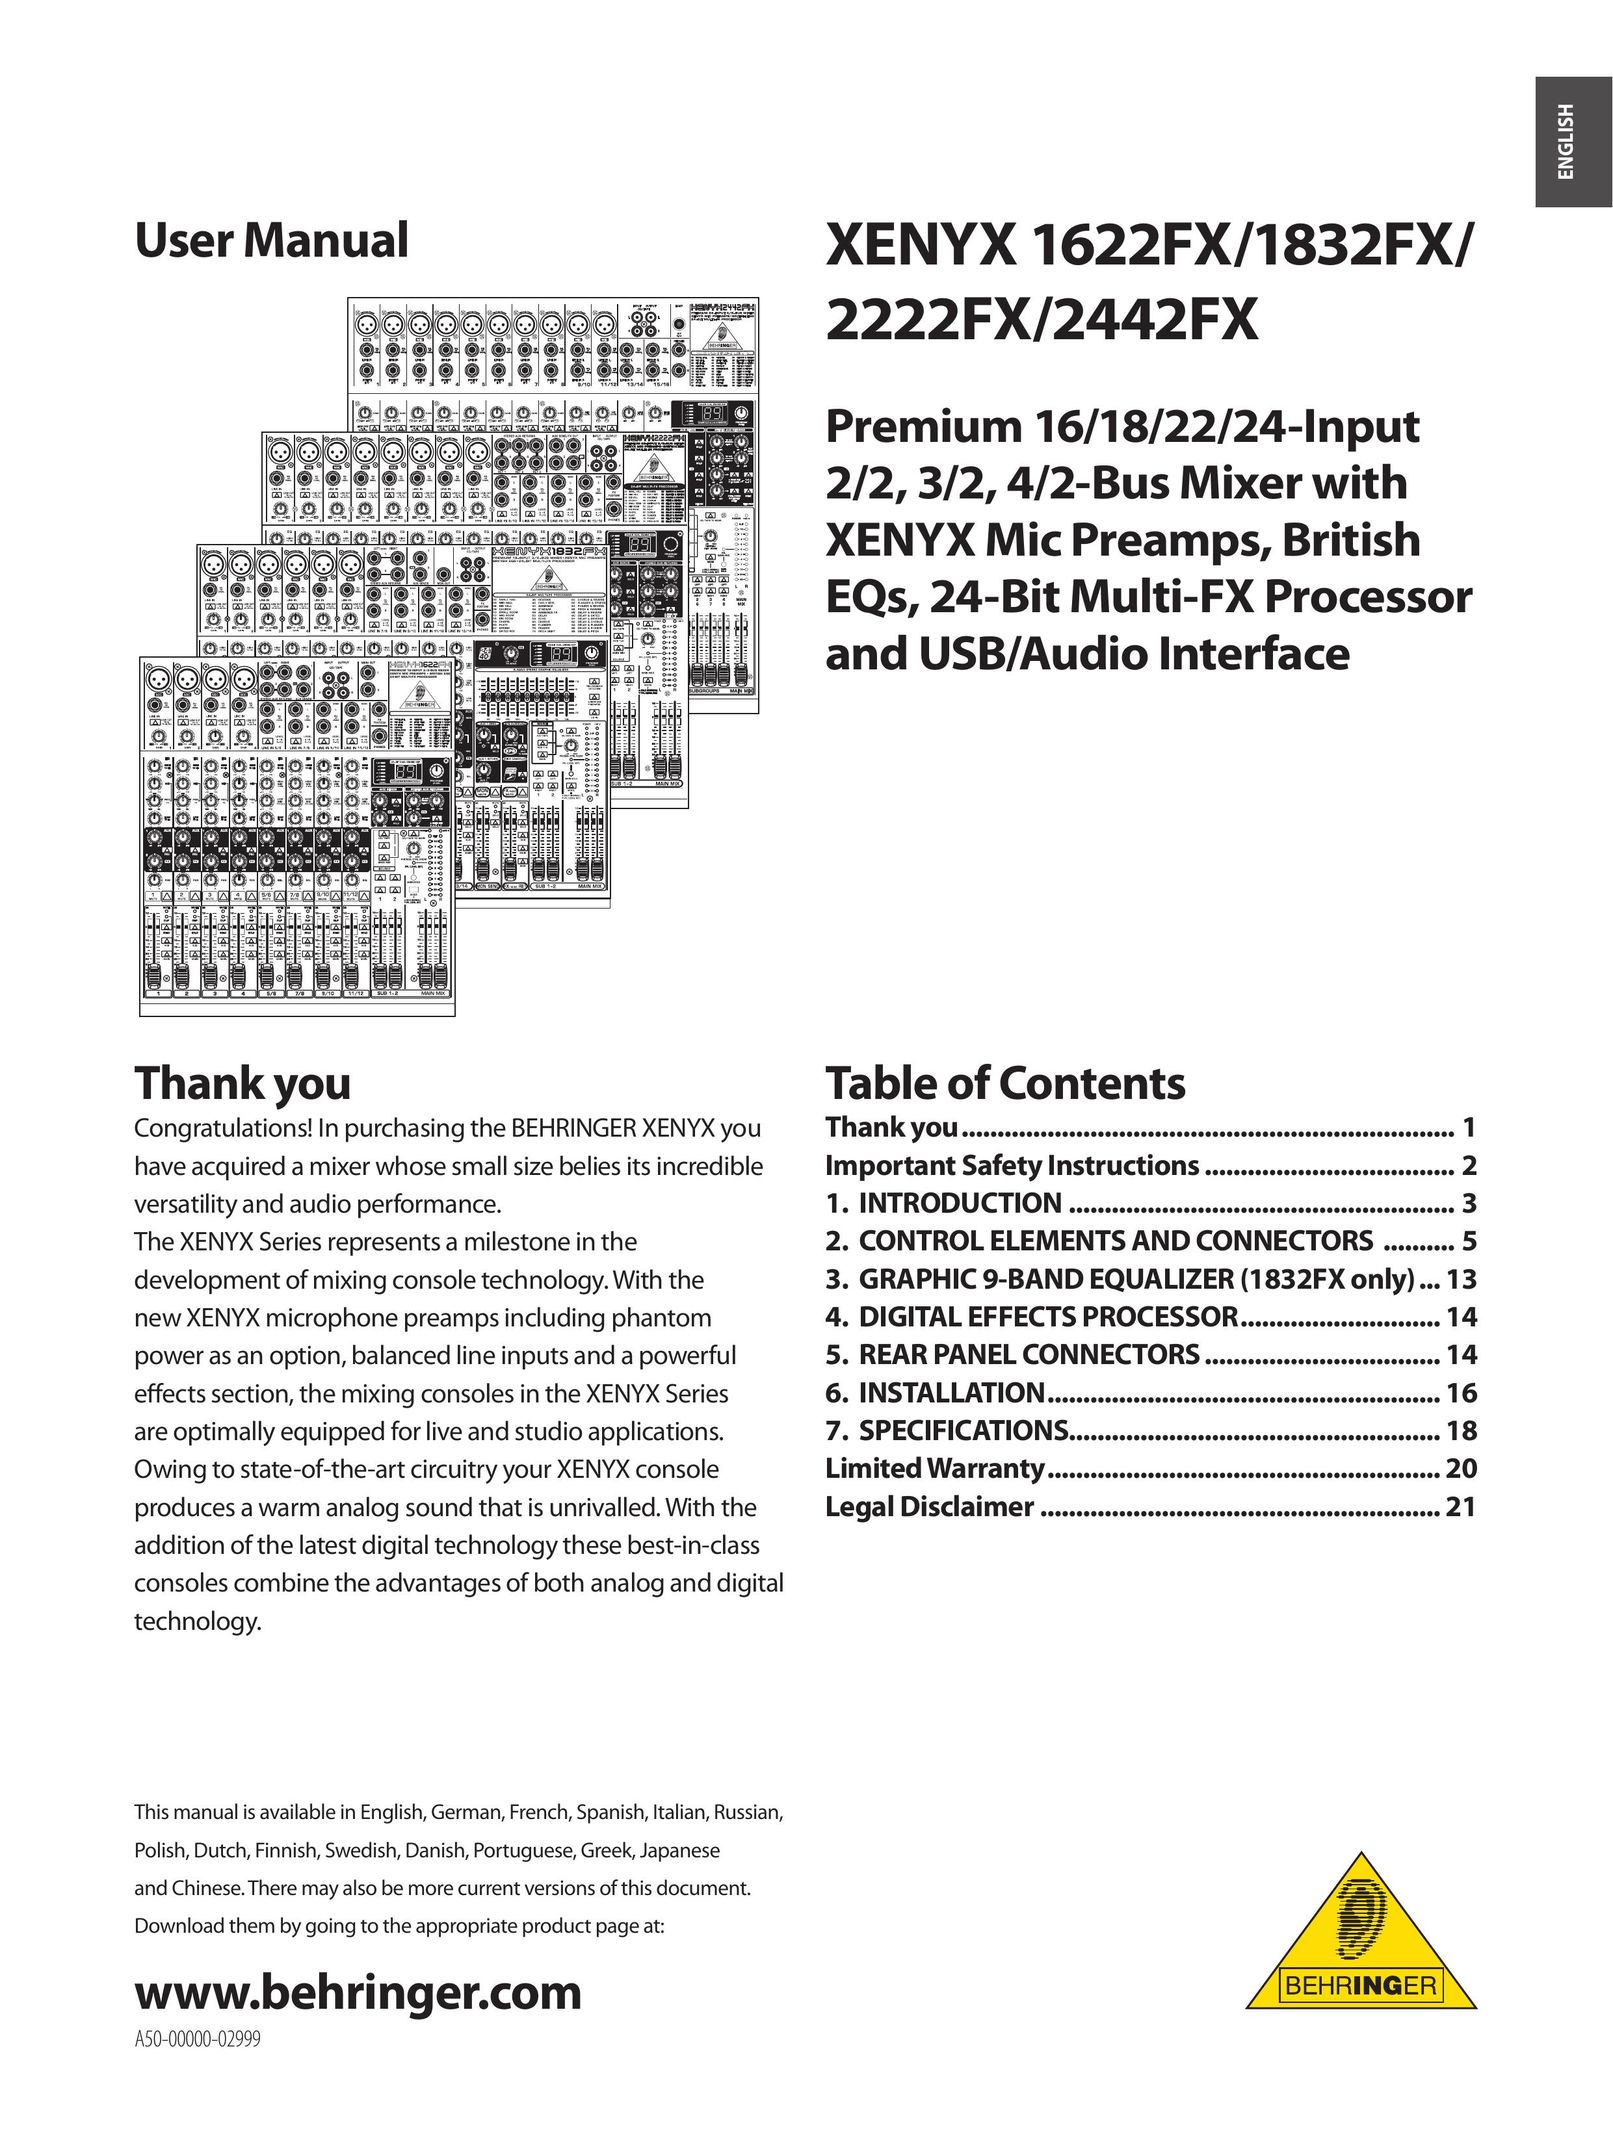 Behringer 1622FX Mixer User Manual